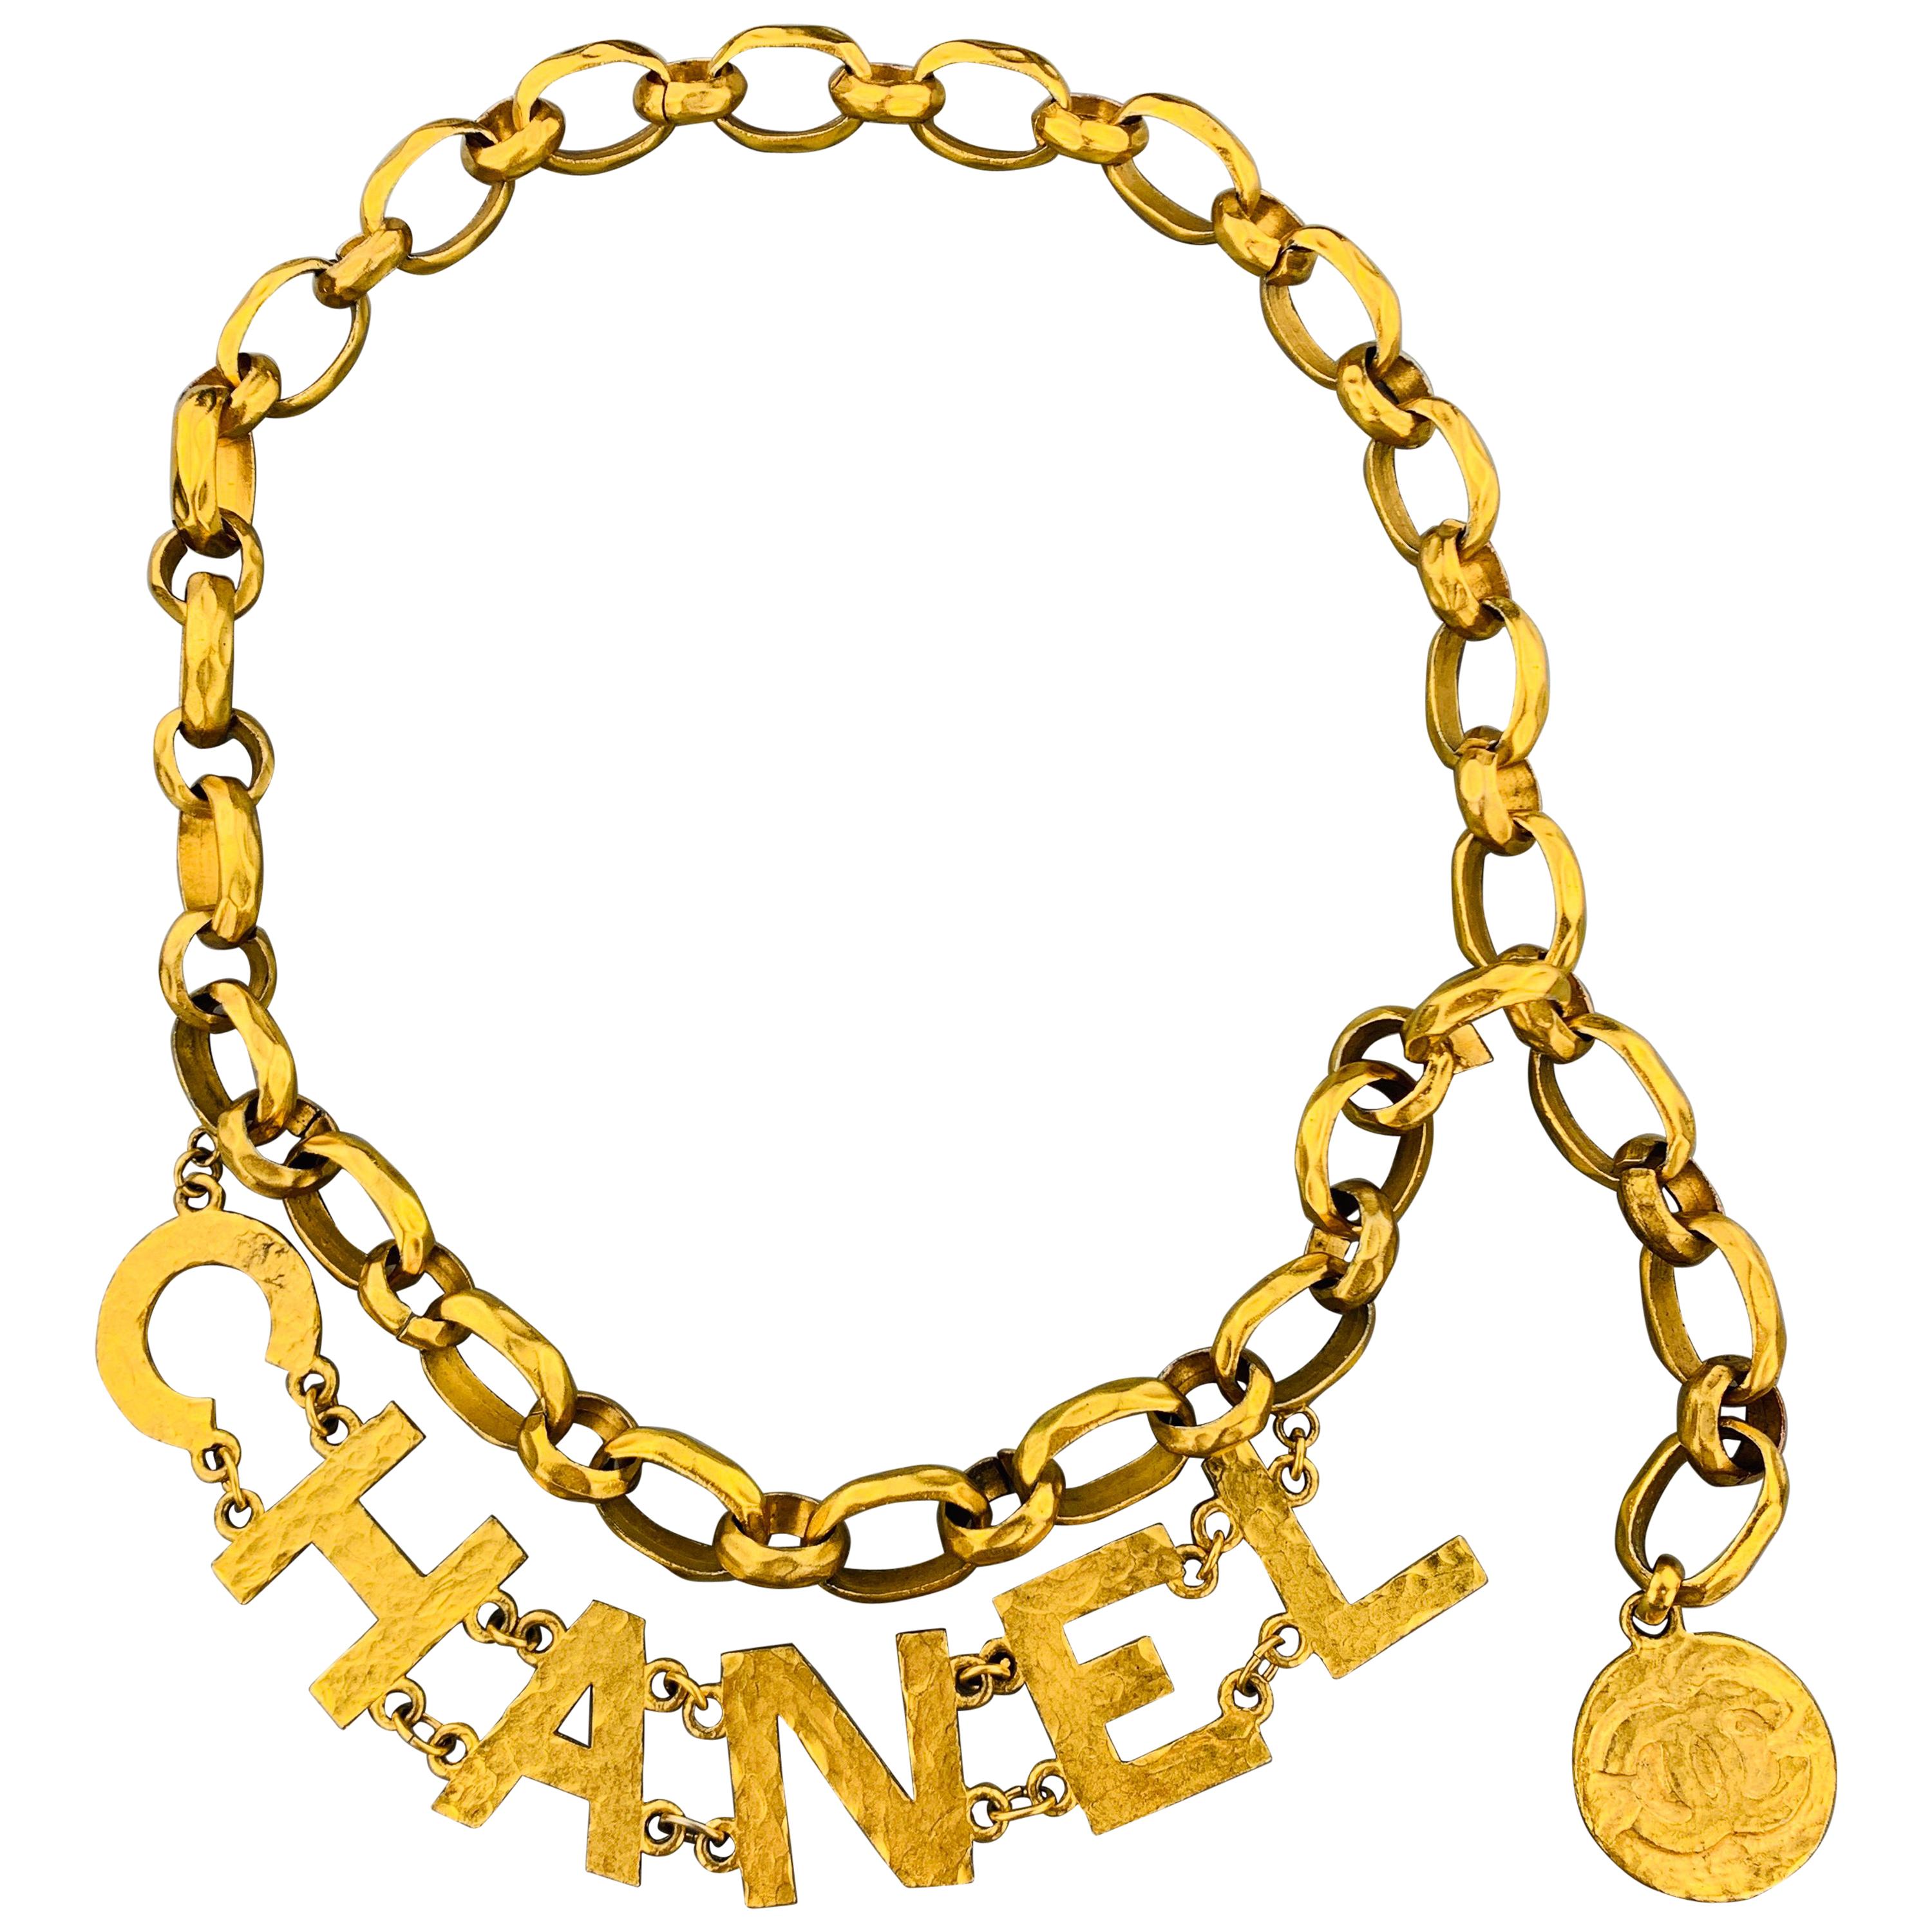 CHANEL 1993 Vintage Gold Tone Hammered Metal Chain Letters Necklace Belt